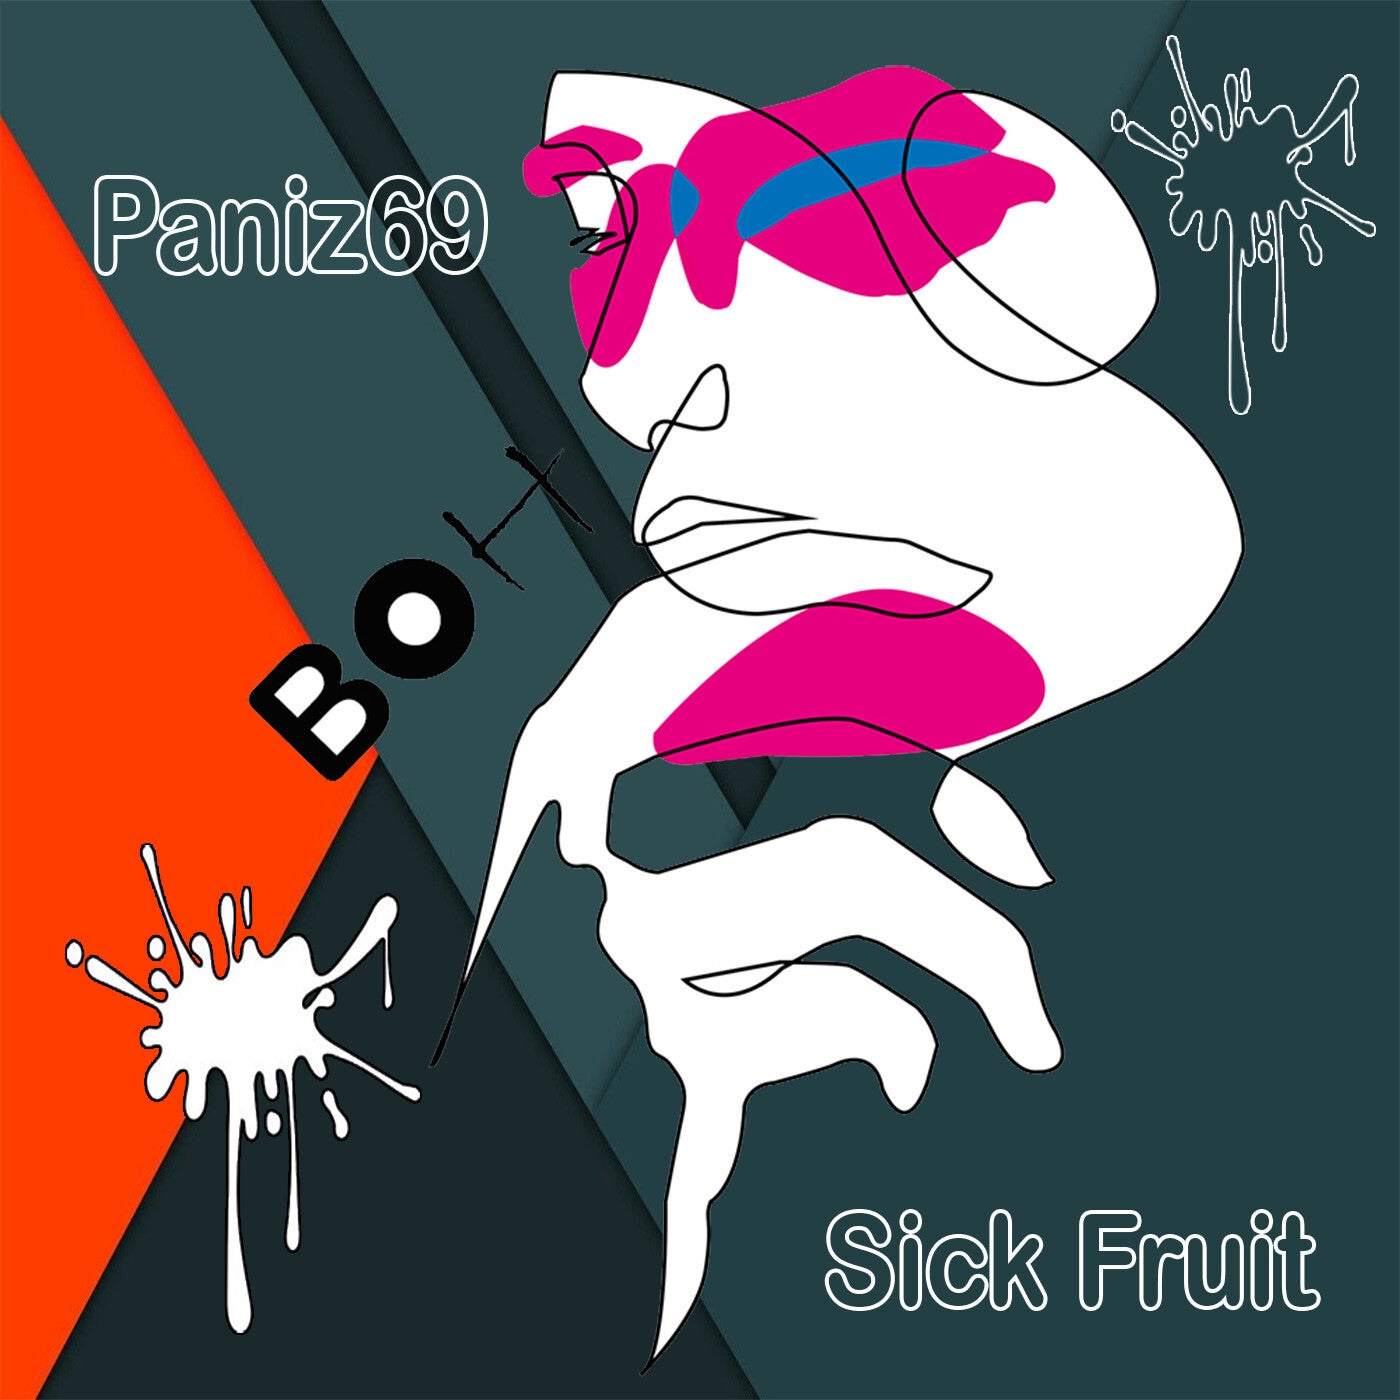 Sick Fruit